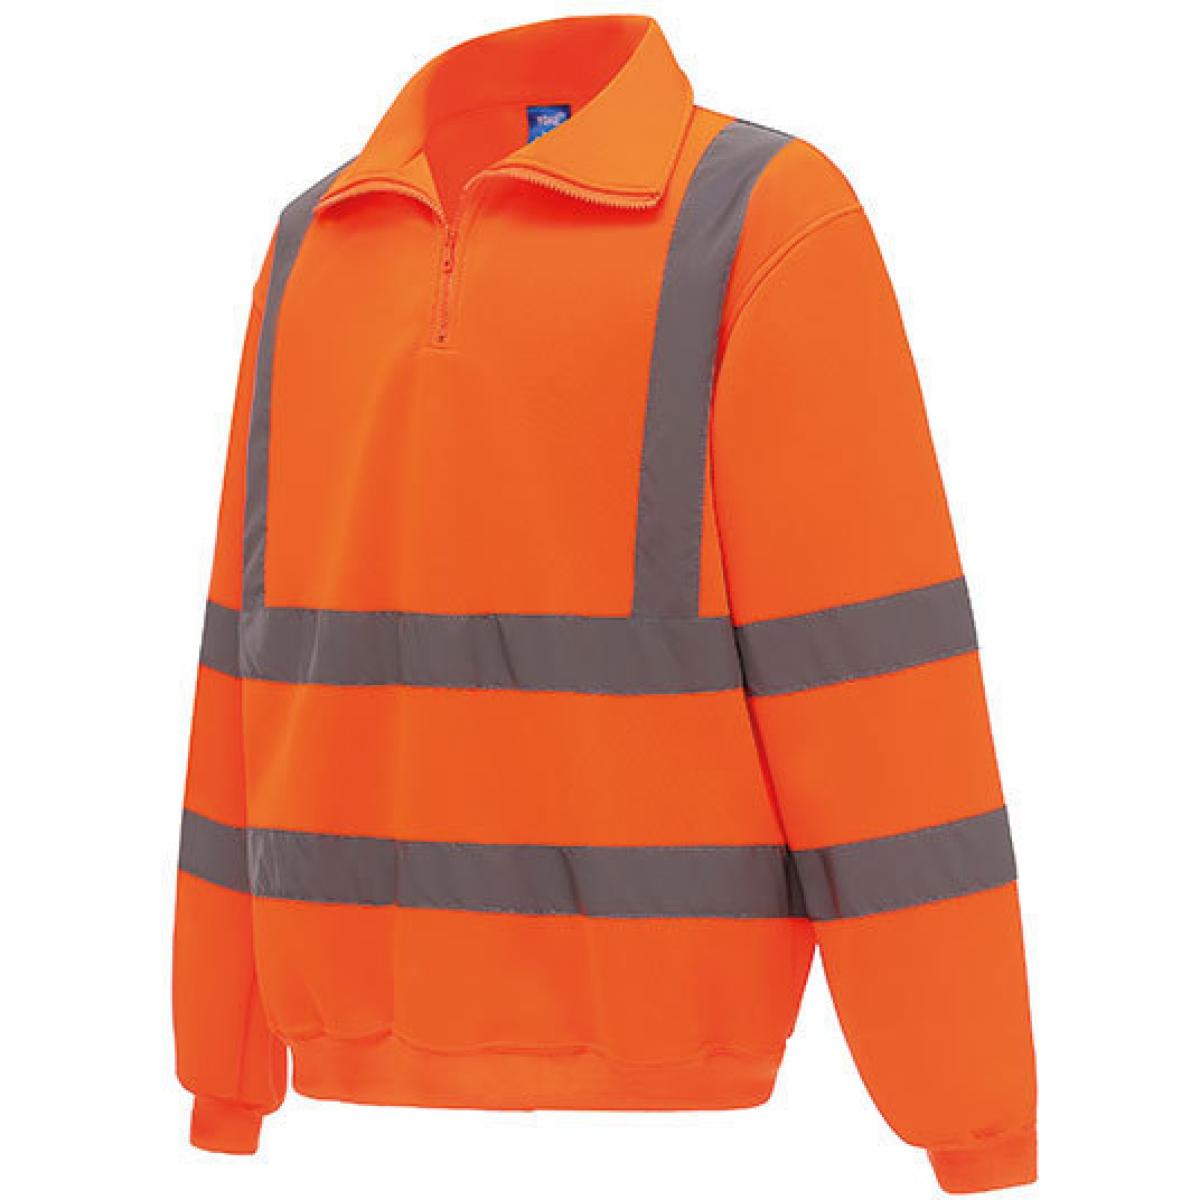 Hersteller: YOKO Herstellernummer: HVK06 Artikelbezeichnung: Hi Vis 1/4 Zip Sweatshirt - EN ISO 20471:2013 Klasse 3 Farbe: Hi-Vis Orange